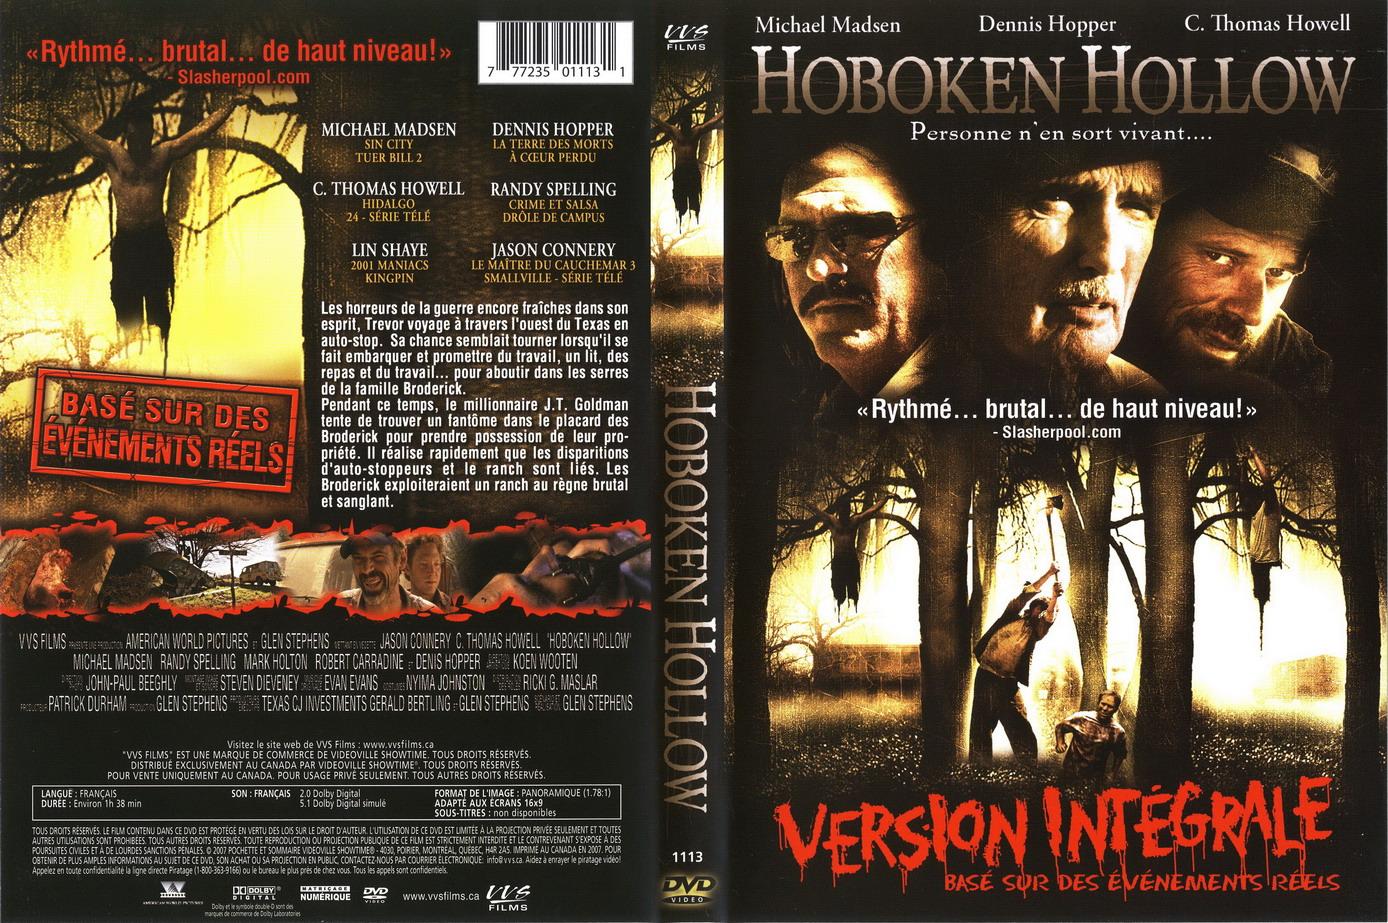 Jaquette DVD Hoboken Hollow